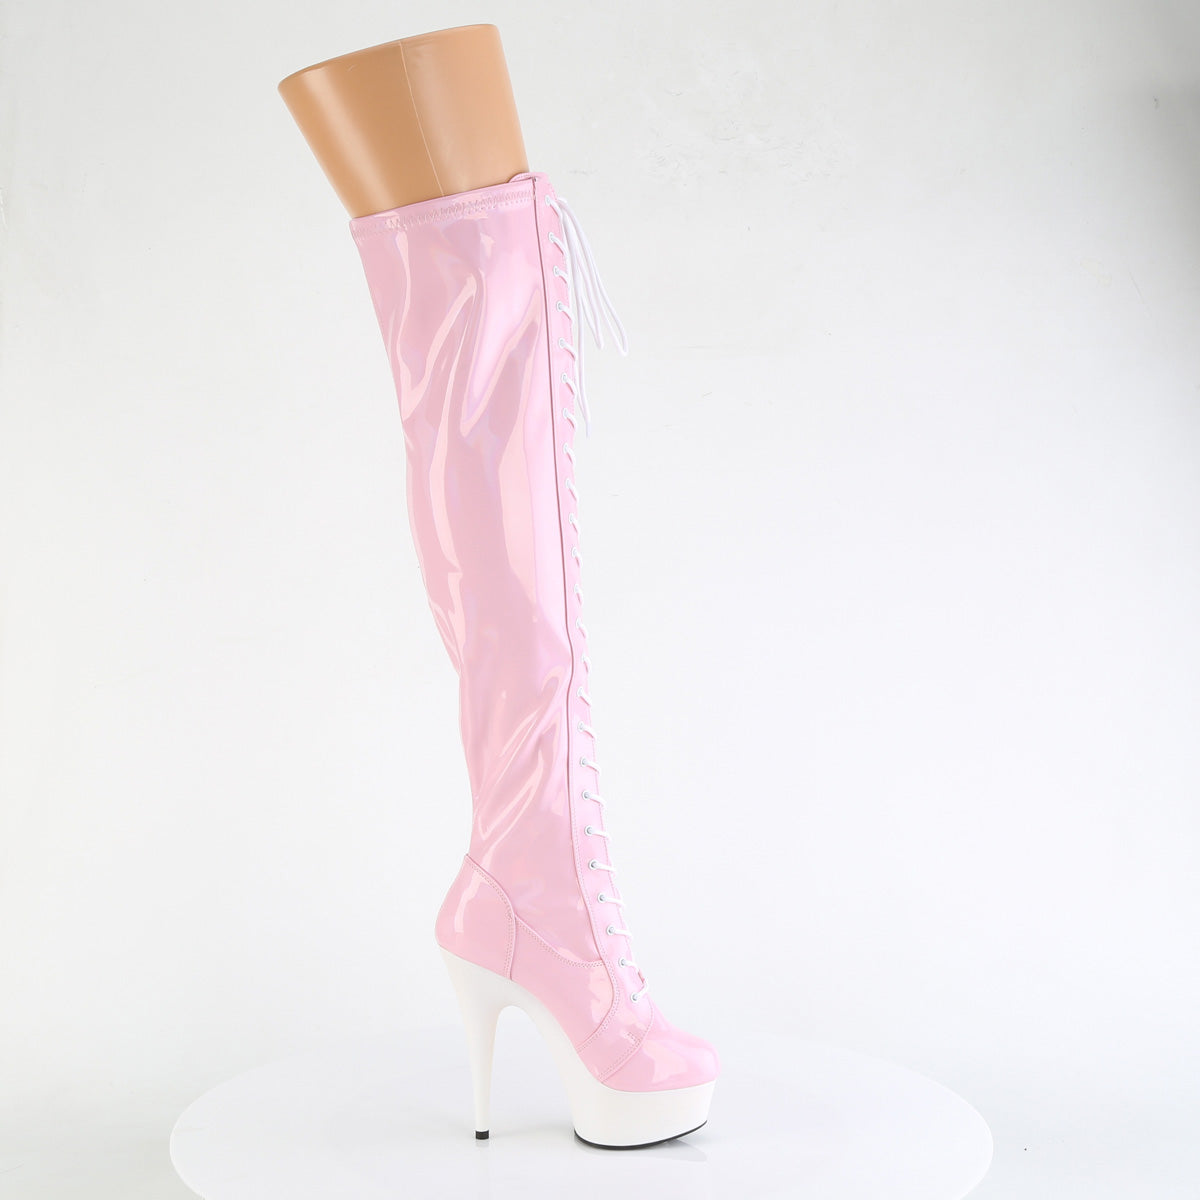 DELIGHT-3029 Stiletto Heel Platform Boots Pink & White Multi view 2